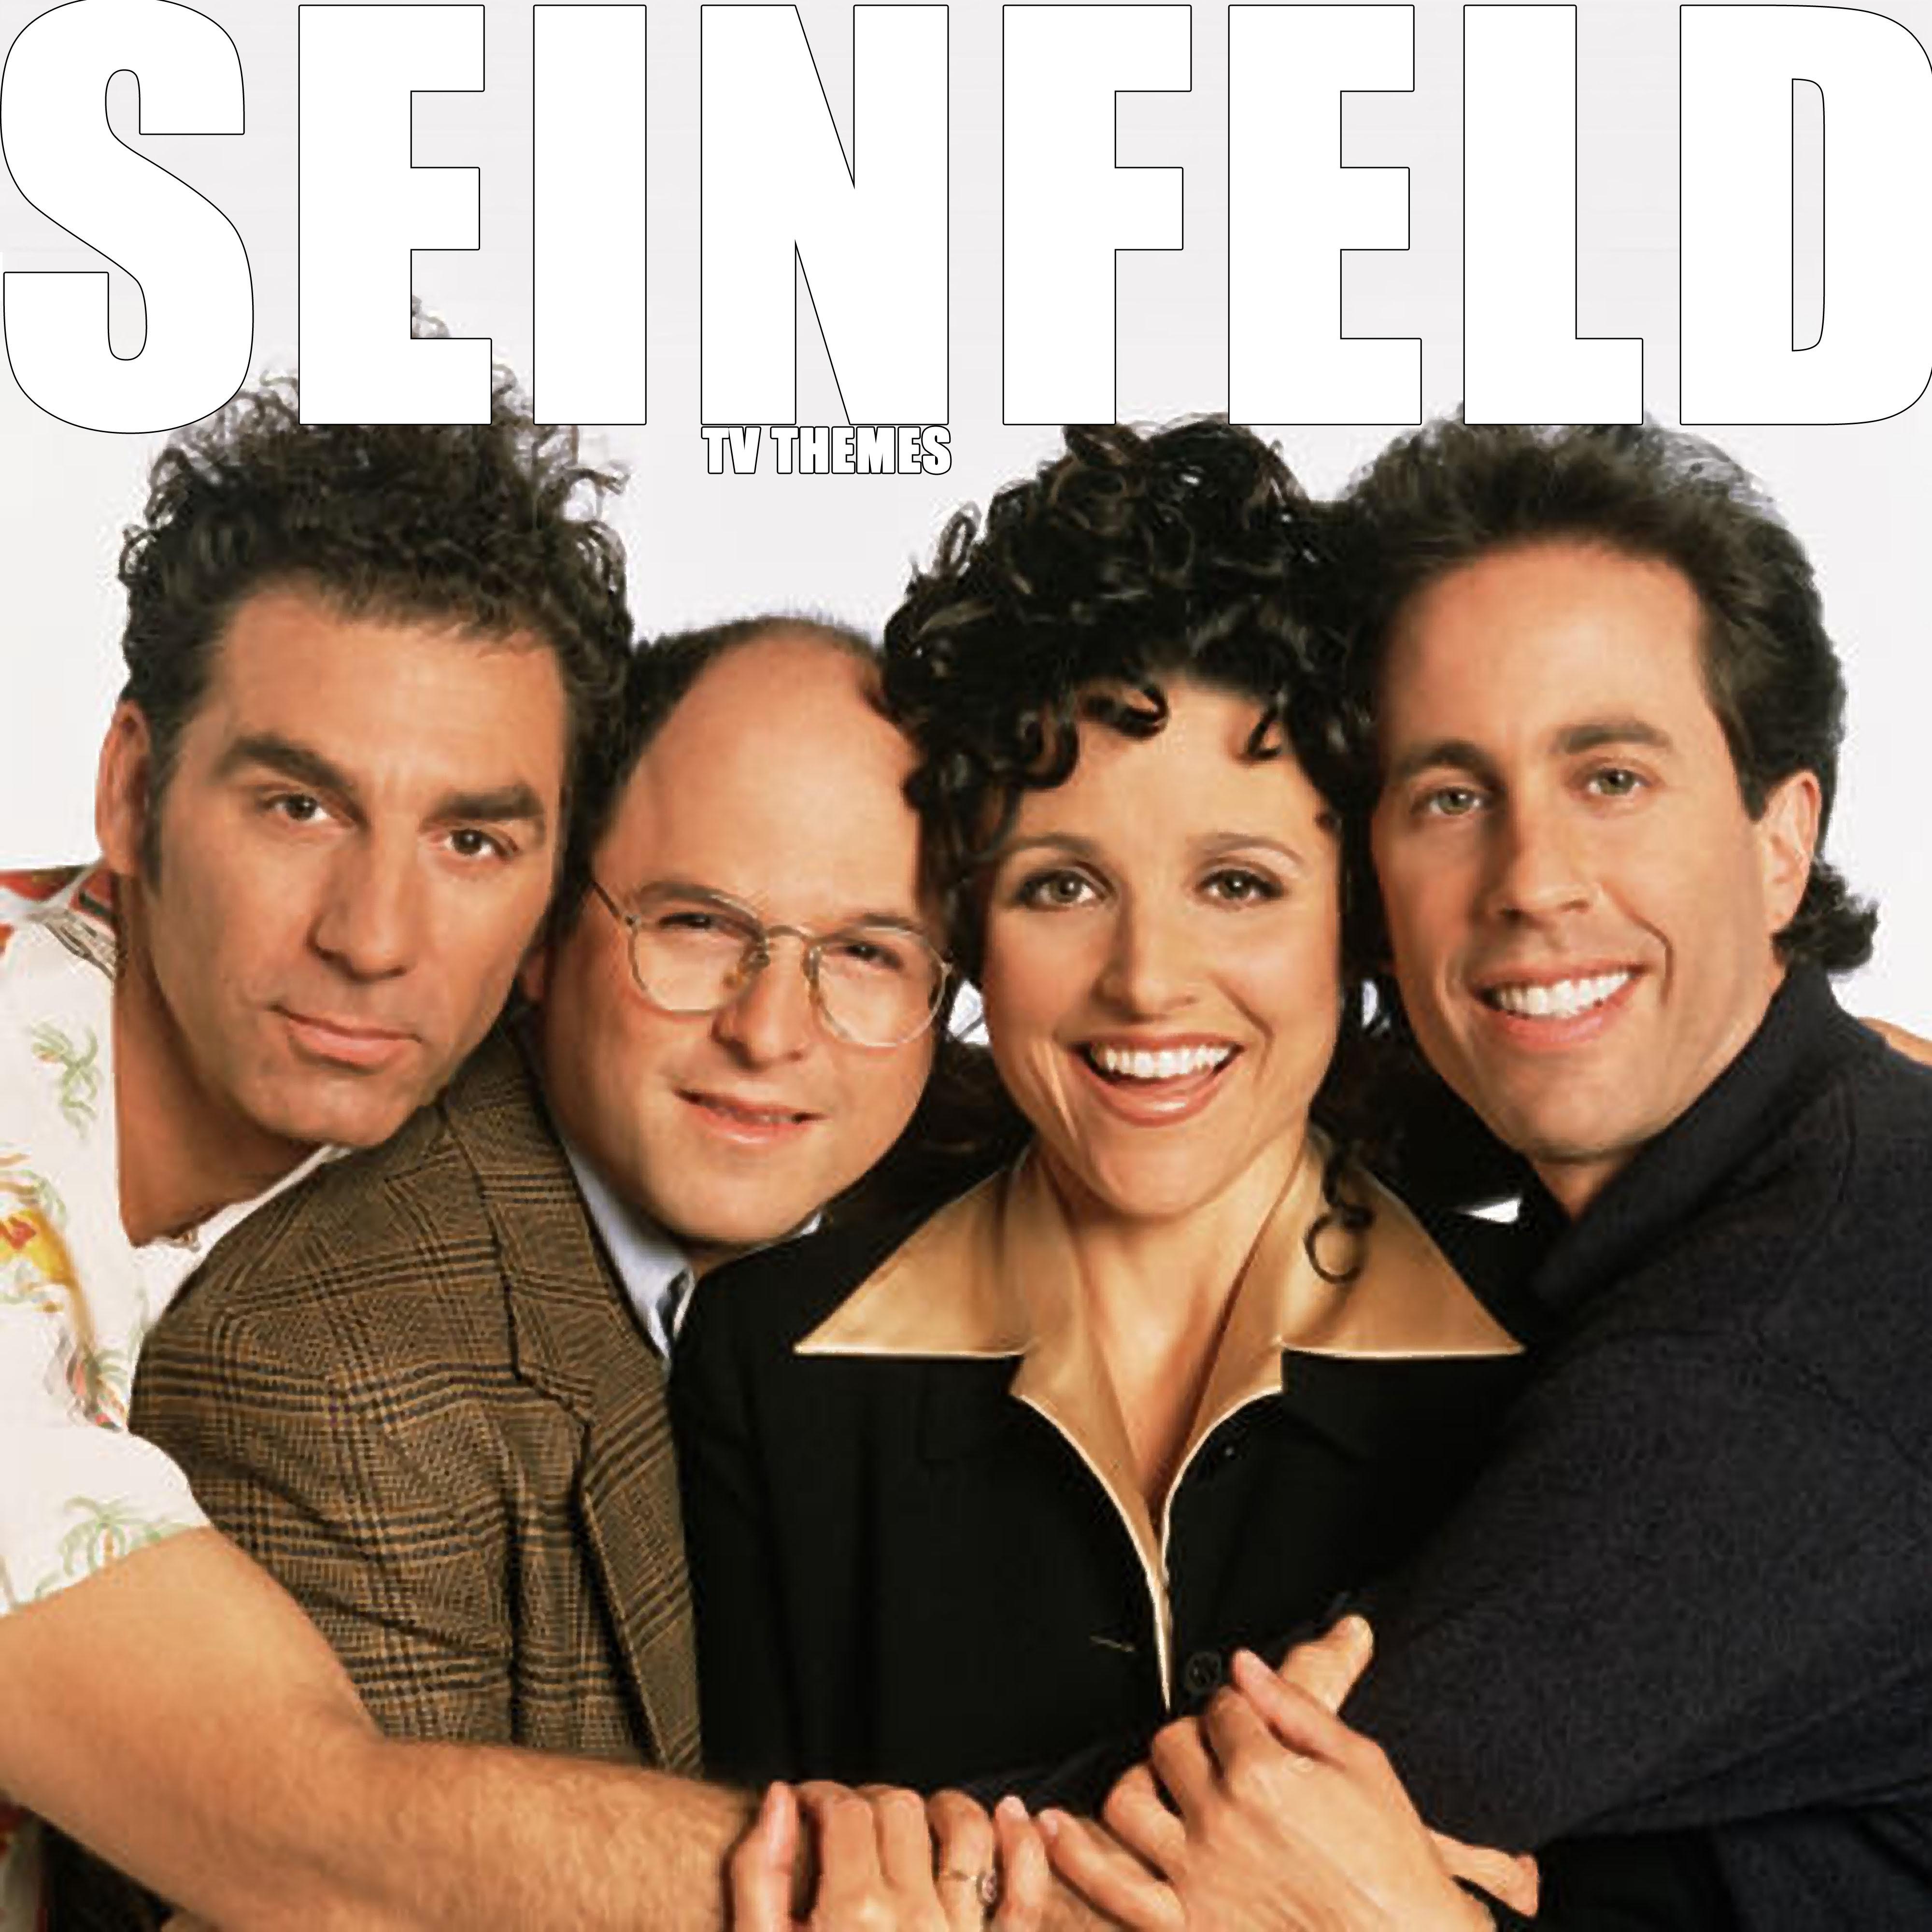 Seinfeld - The Theme Music